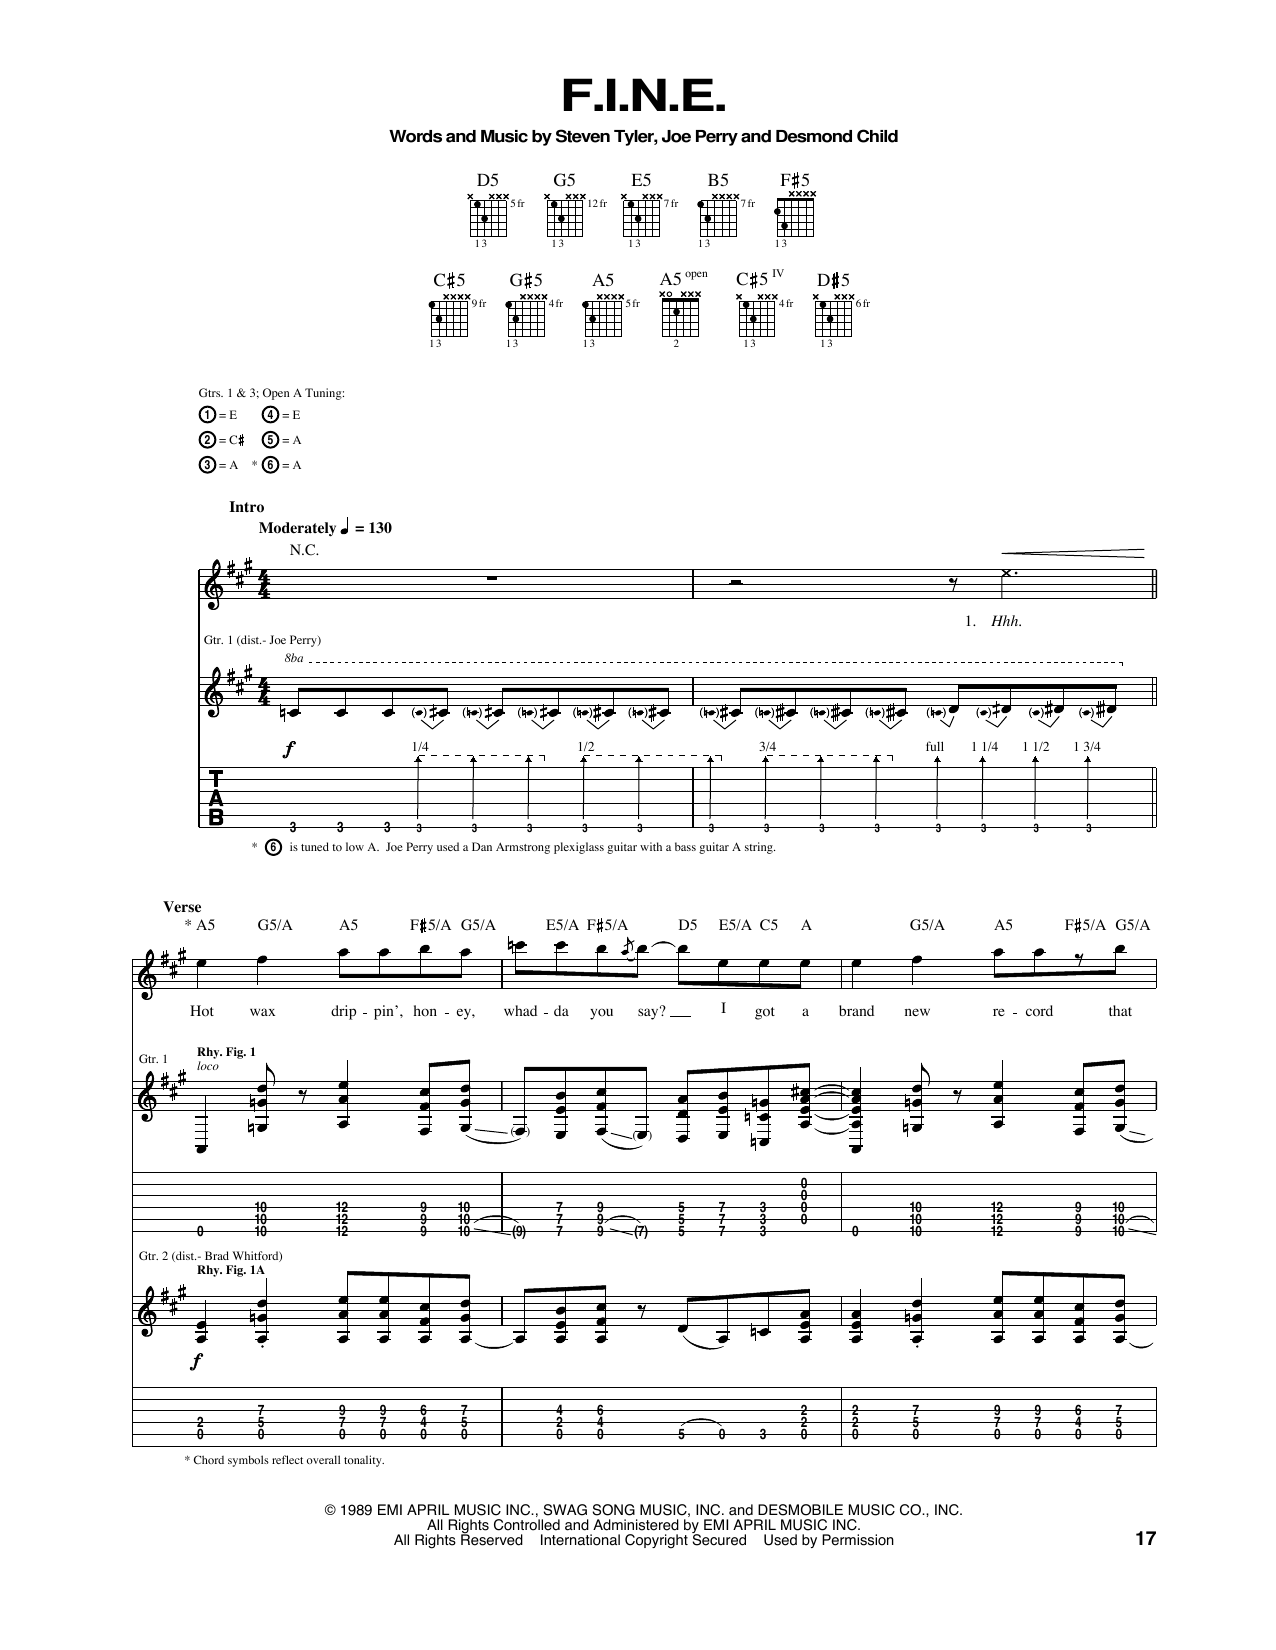 Aerosmith F.I.N.E. Sheet Music Notes & Chords for Guitar Tab - Download or Print PDF